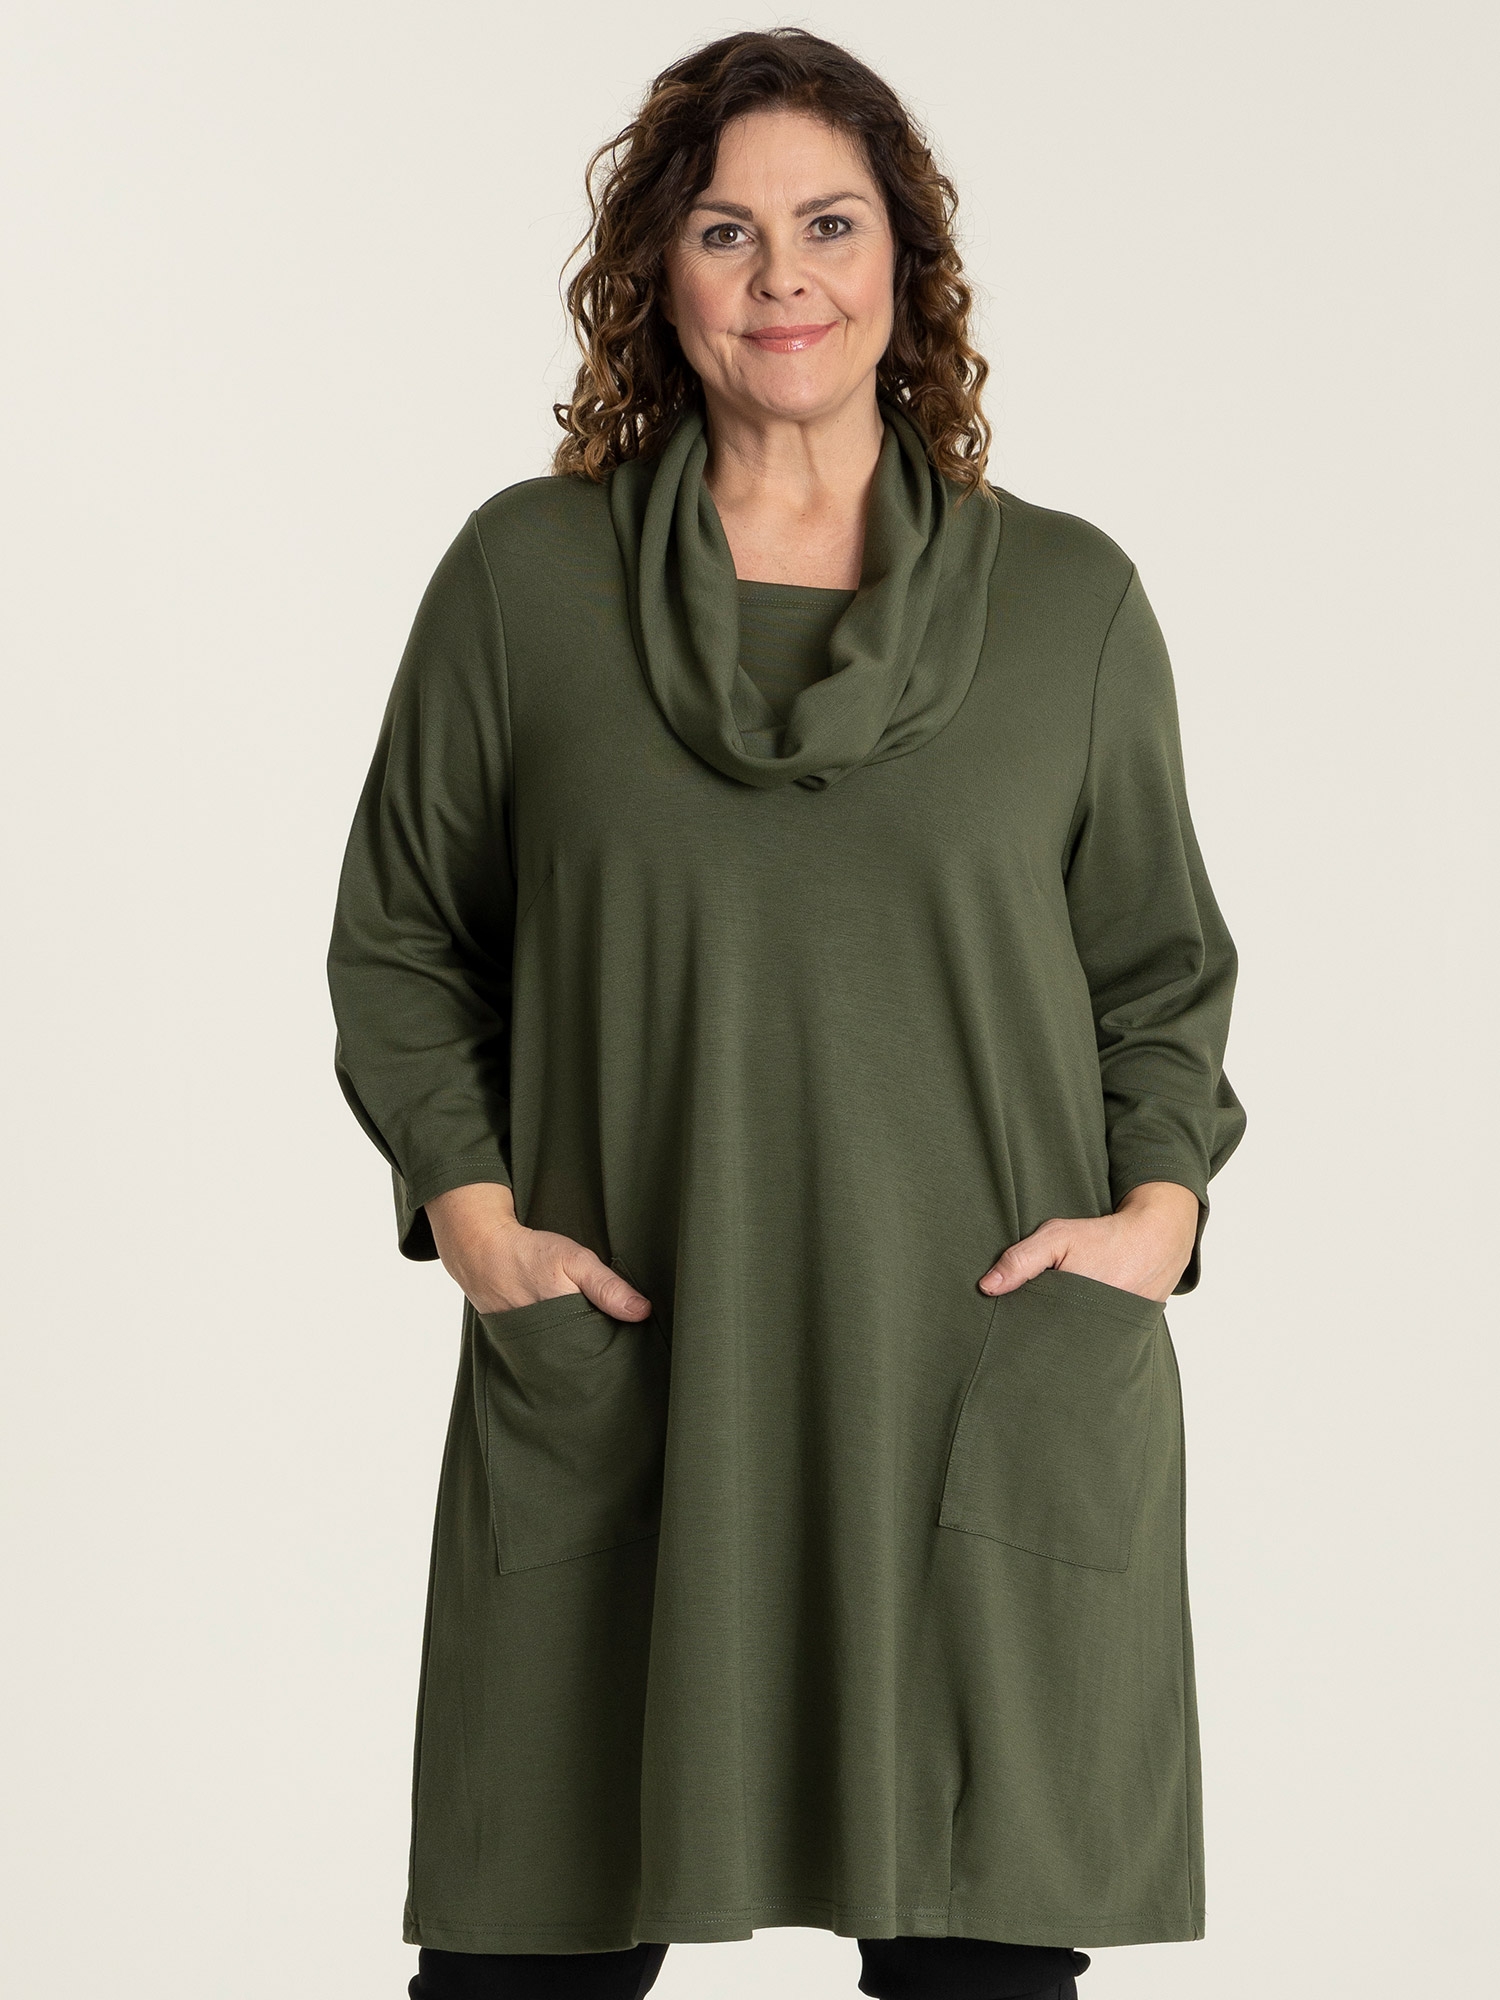 NIKOLINE - olivgrön tunika med fickor fra Gozzip